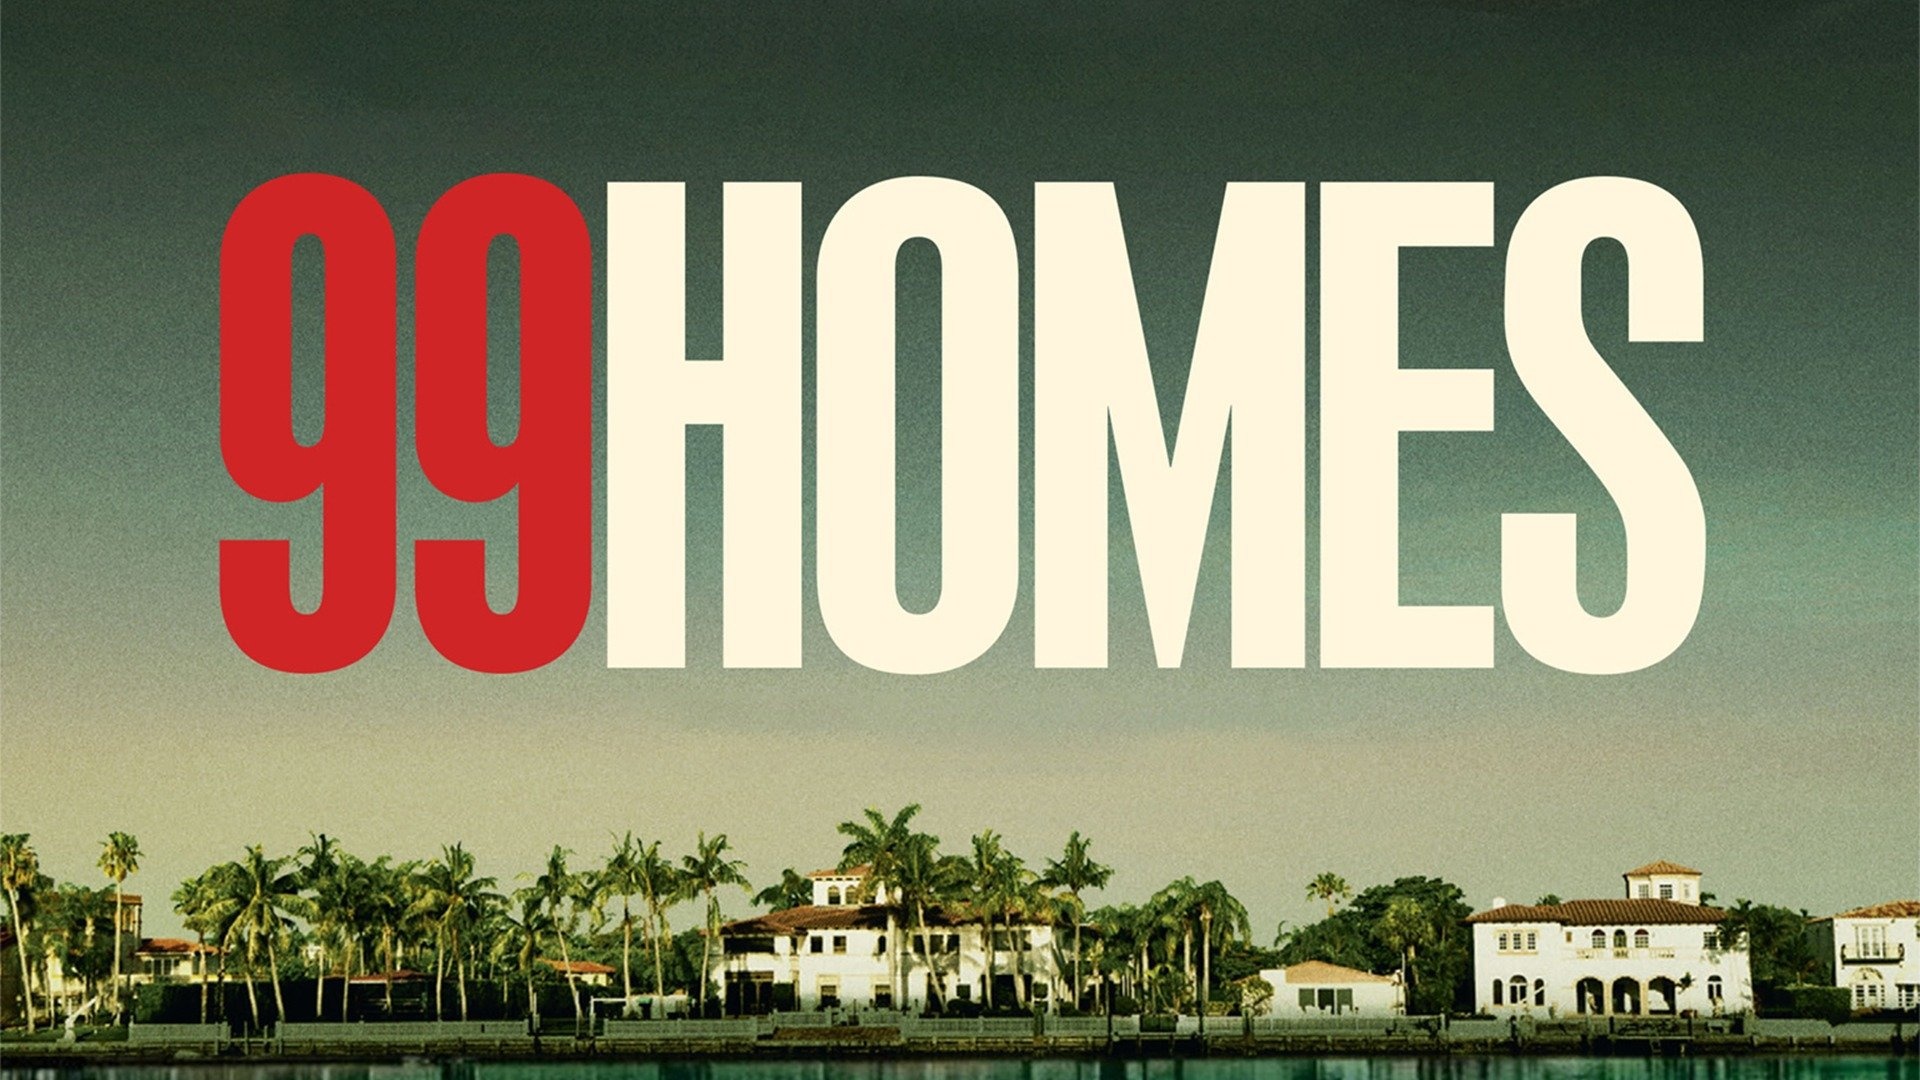 99 Homes movie, Full movie online on Plex, 1920x1080 Full HD Desktop